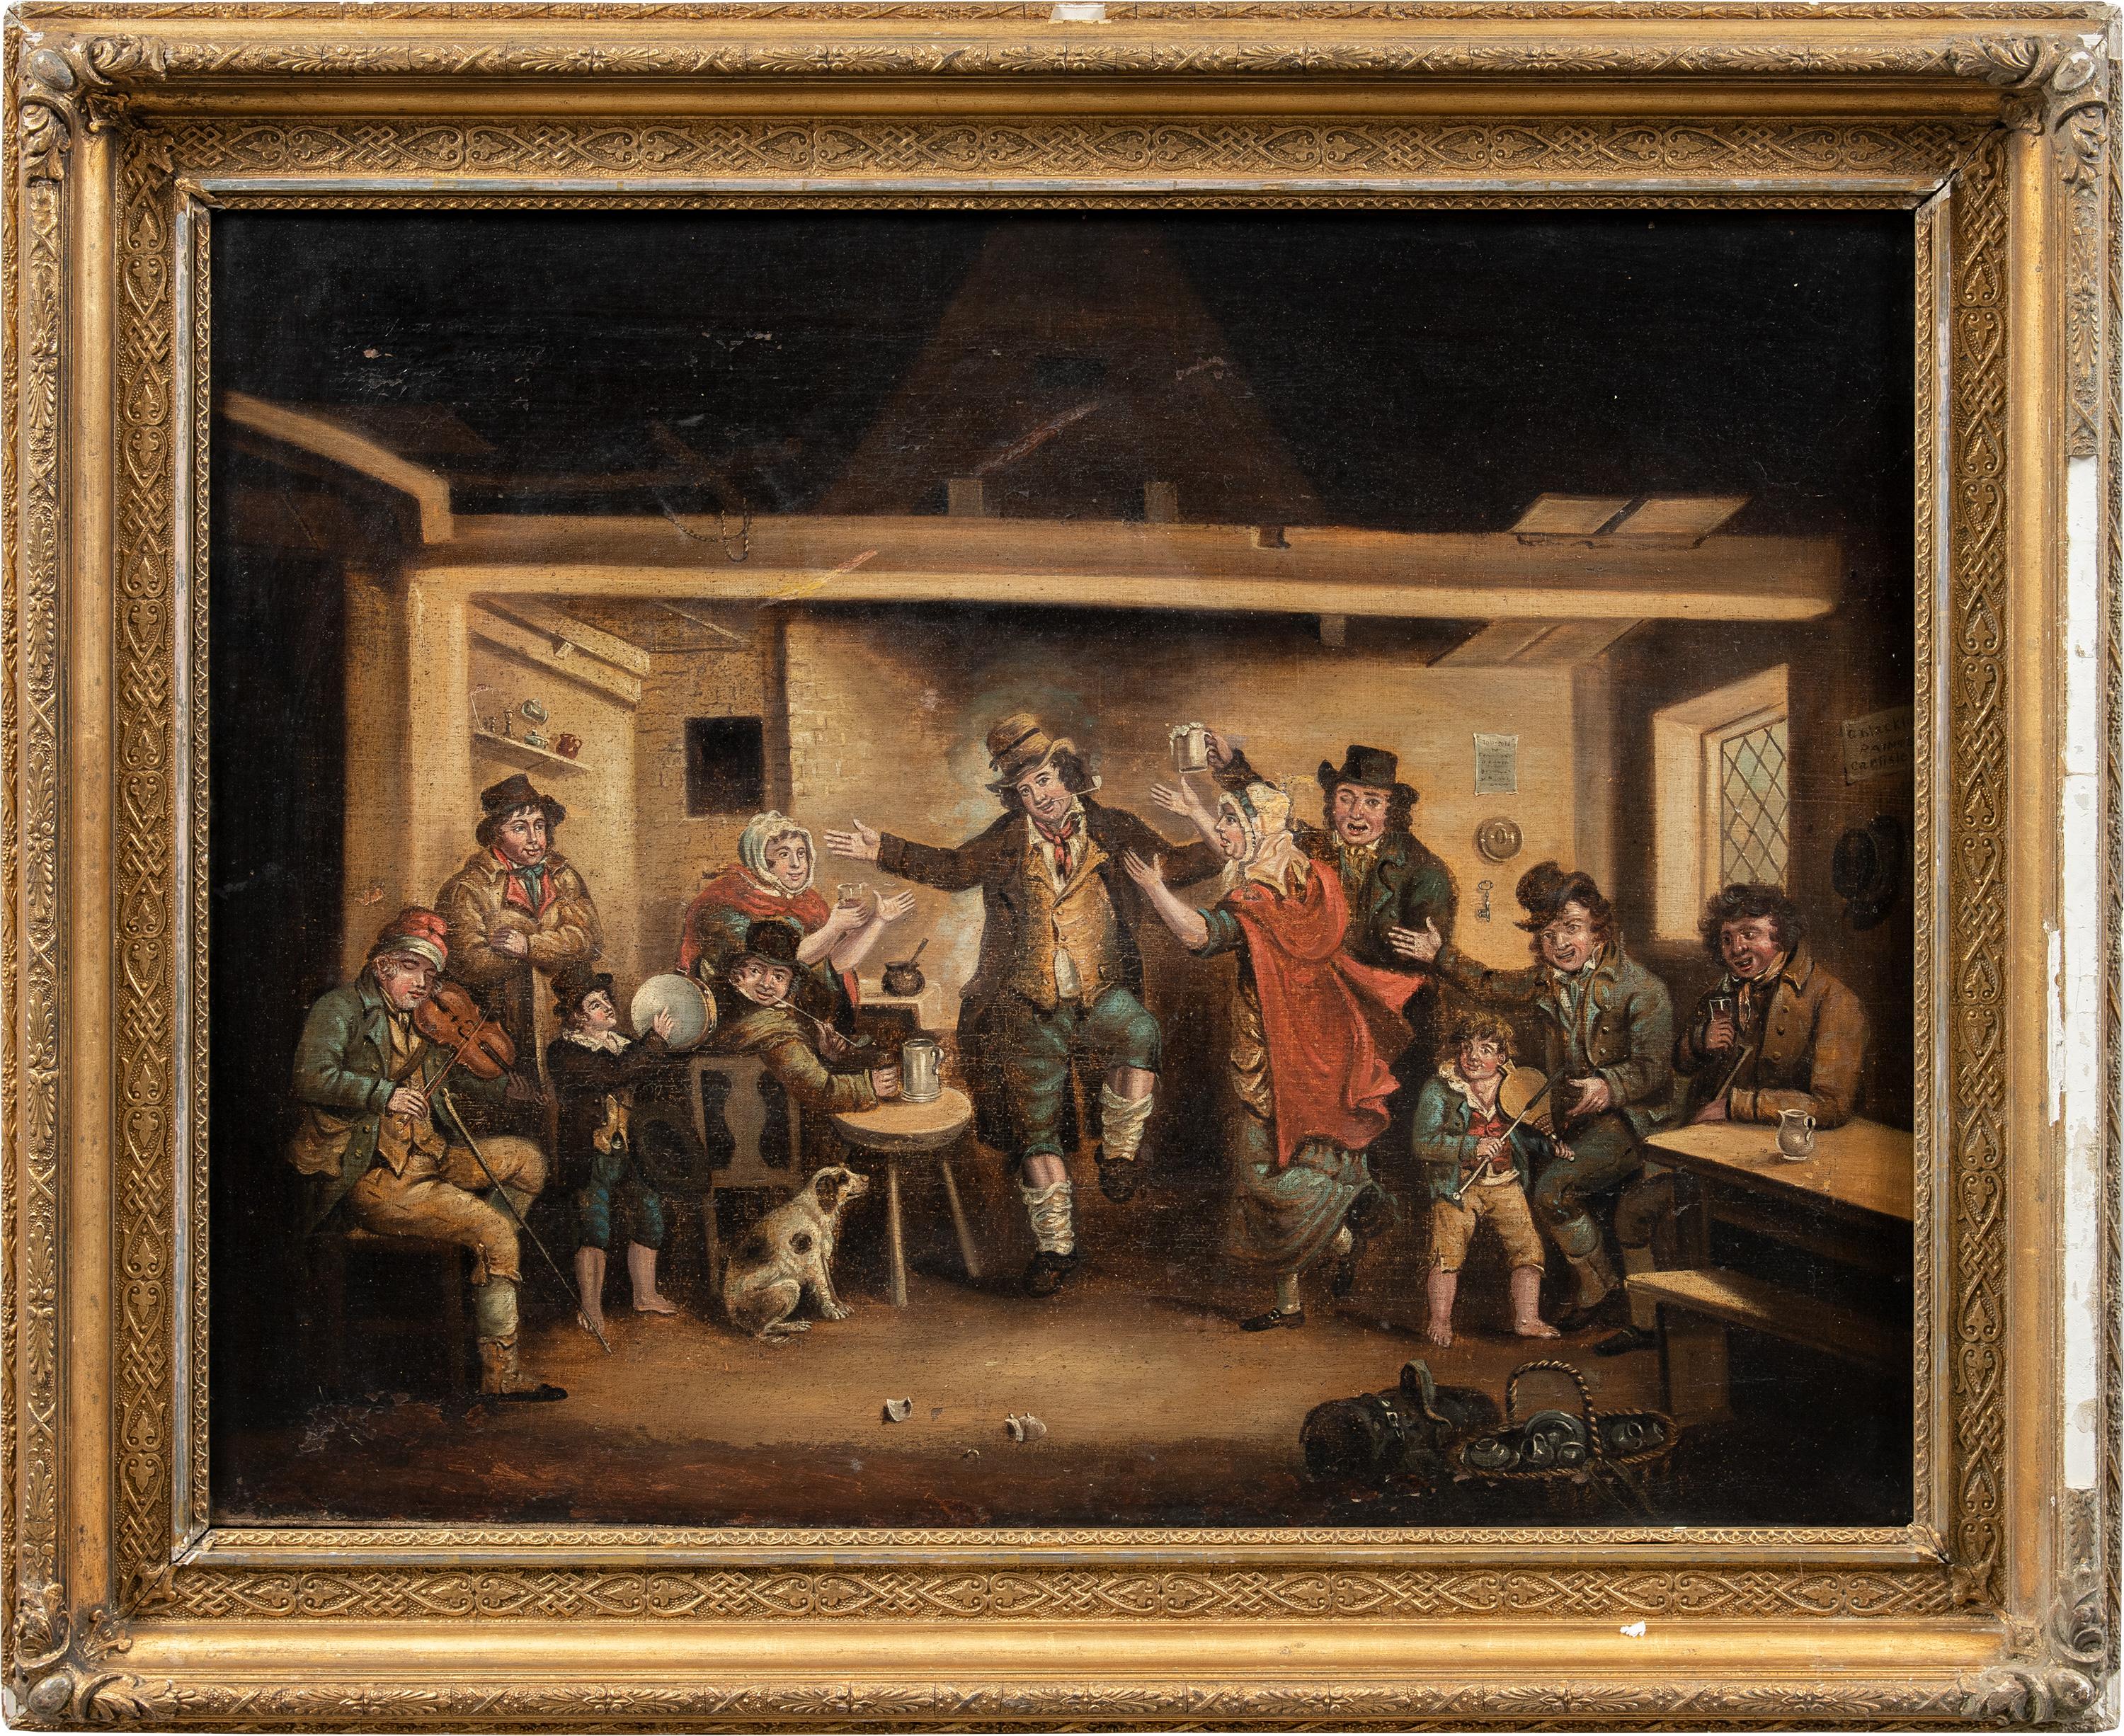 Unknown Figurative Painting - Realist British painter - 19th century figure painting - Tavern interior